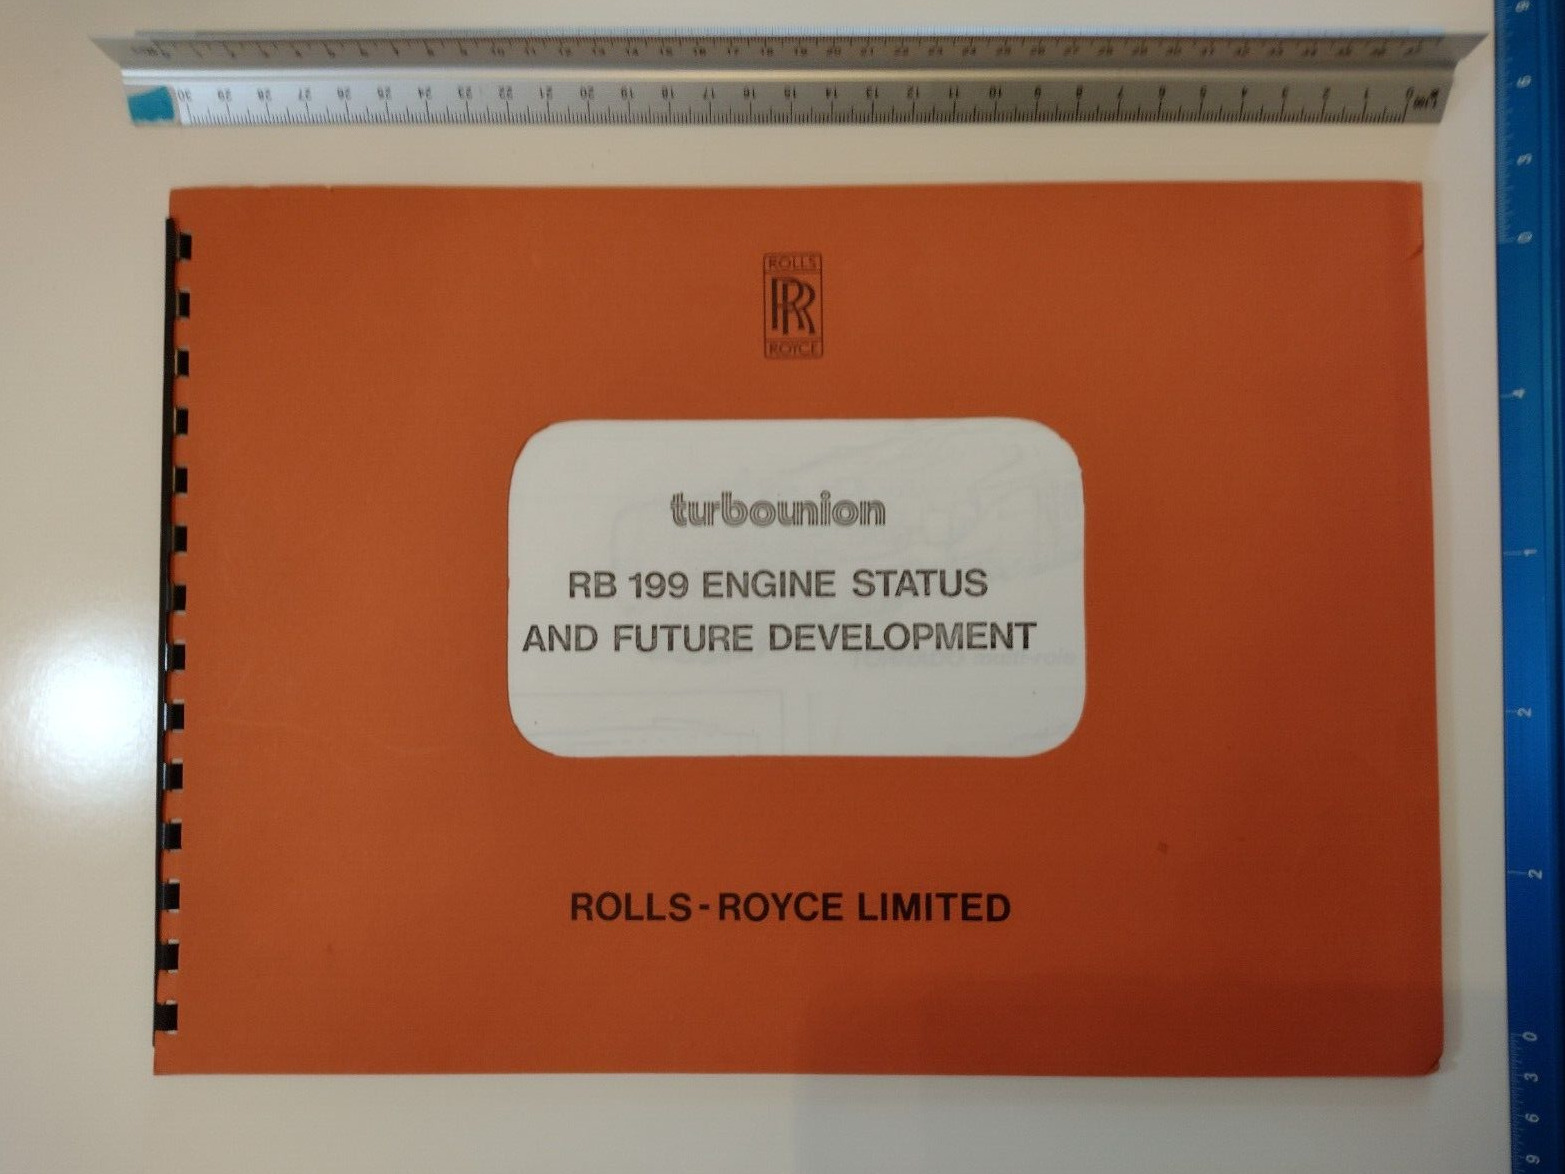 RB 199 ENGINE TECHNICAL BROCHURE PANAVIA TORNADO ROLLS-ROYCE TURBOUNION original